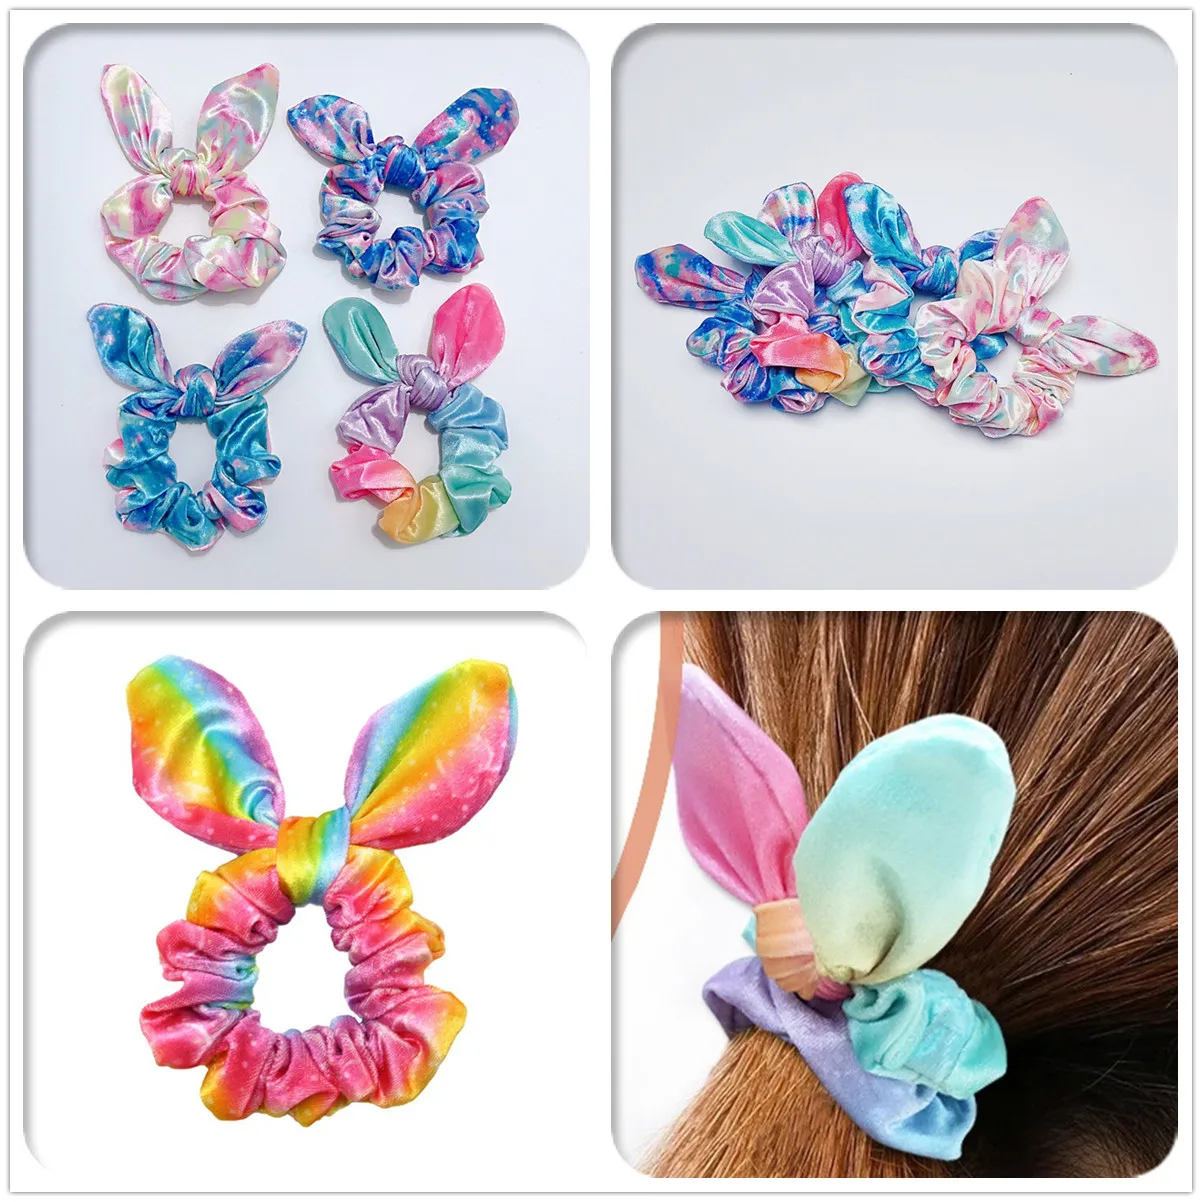 

20pcs Fashion Velvet Rabbit Ears Elastic Hair Bands Tie-Dyed Scrunchies Ponytail Holder For Women Girls HairAccessories Headwear